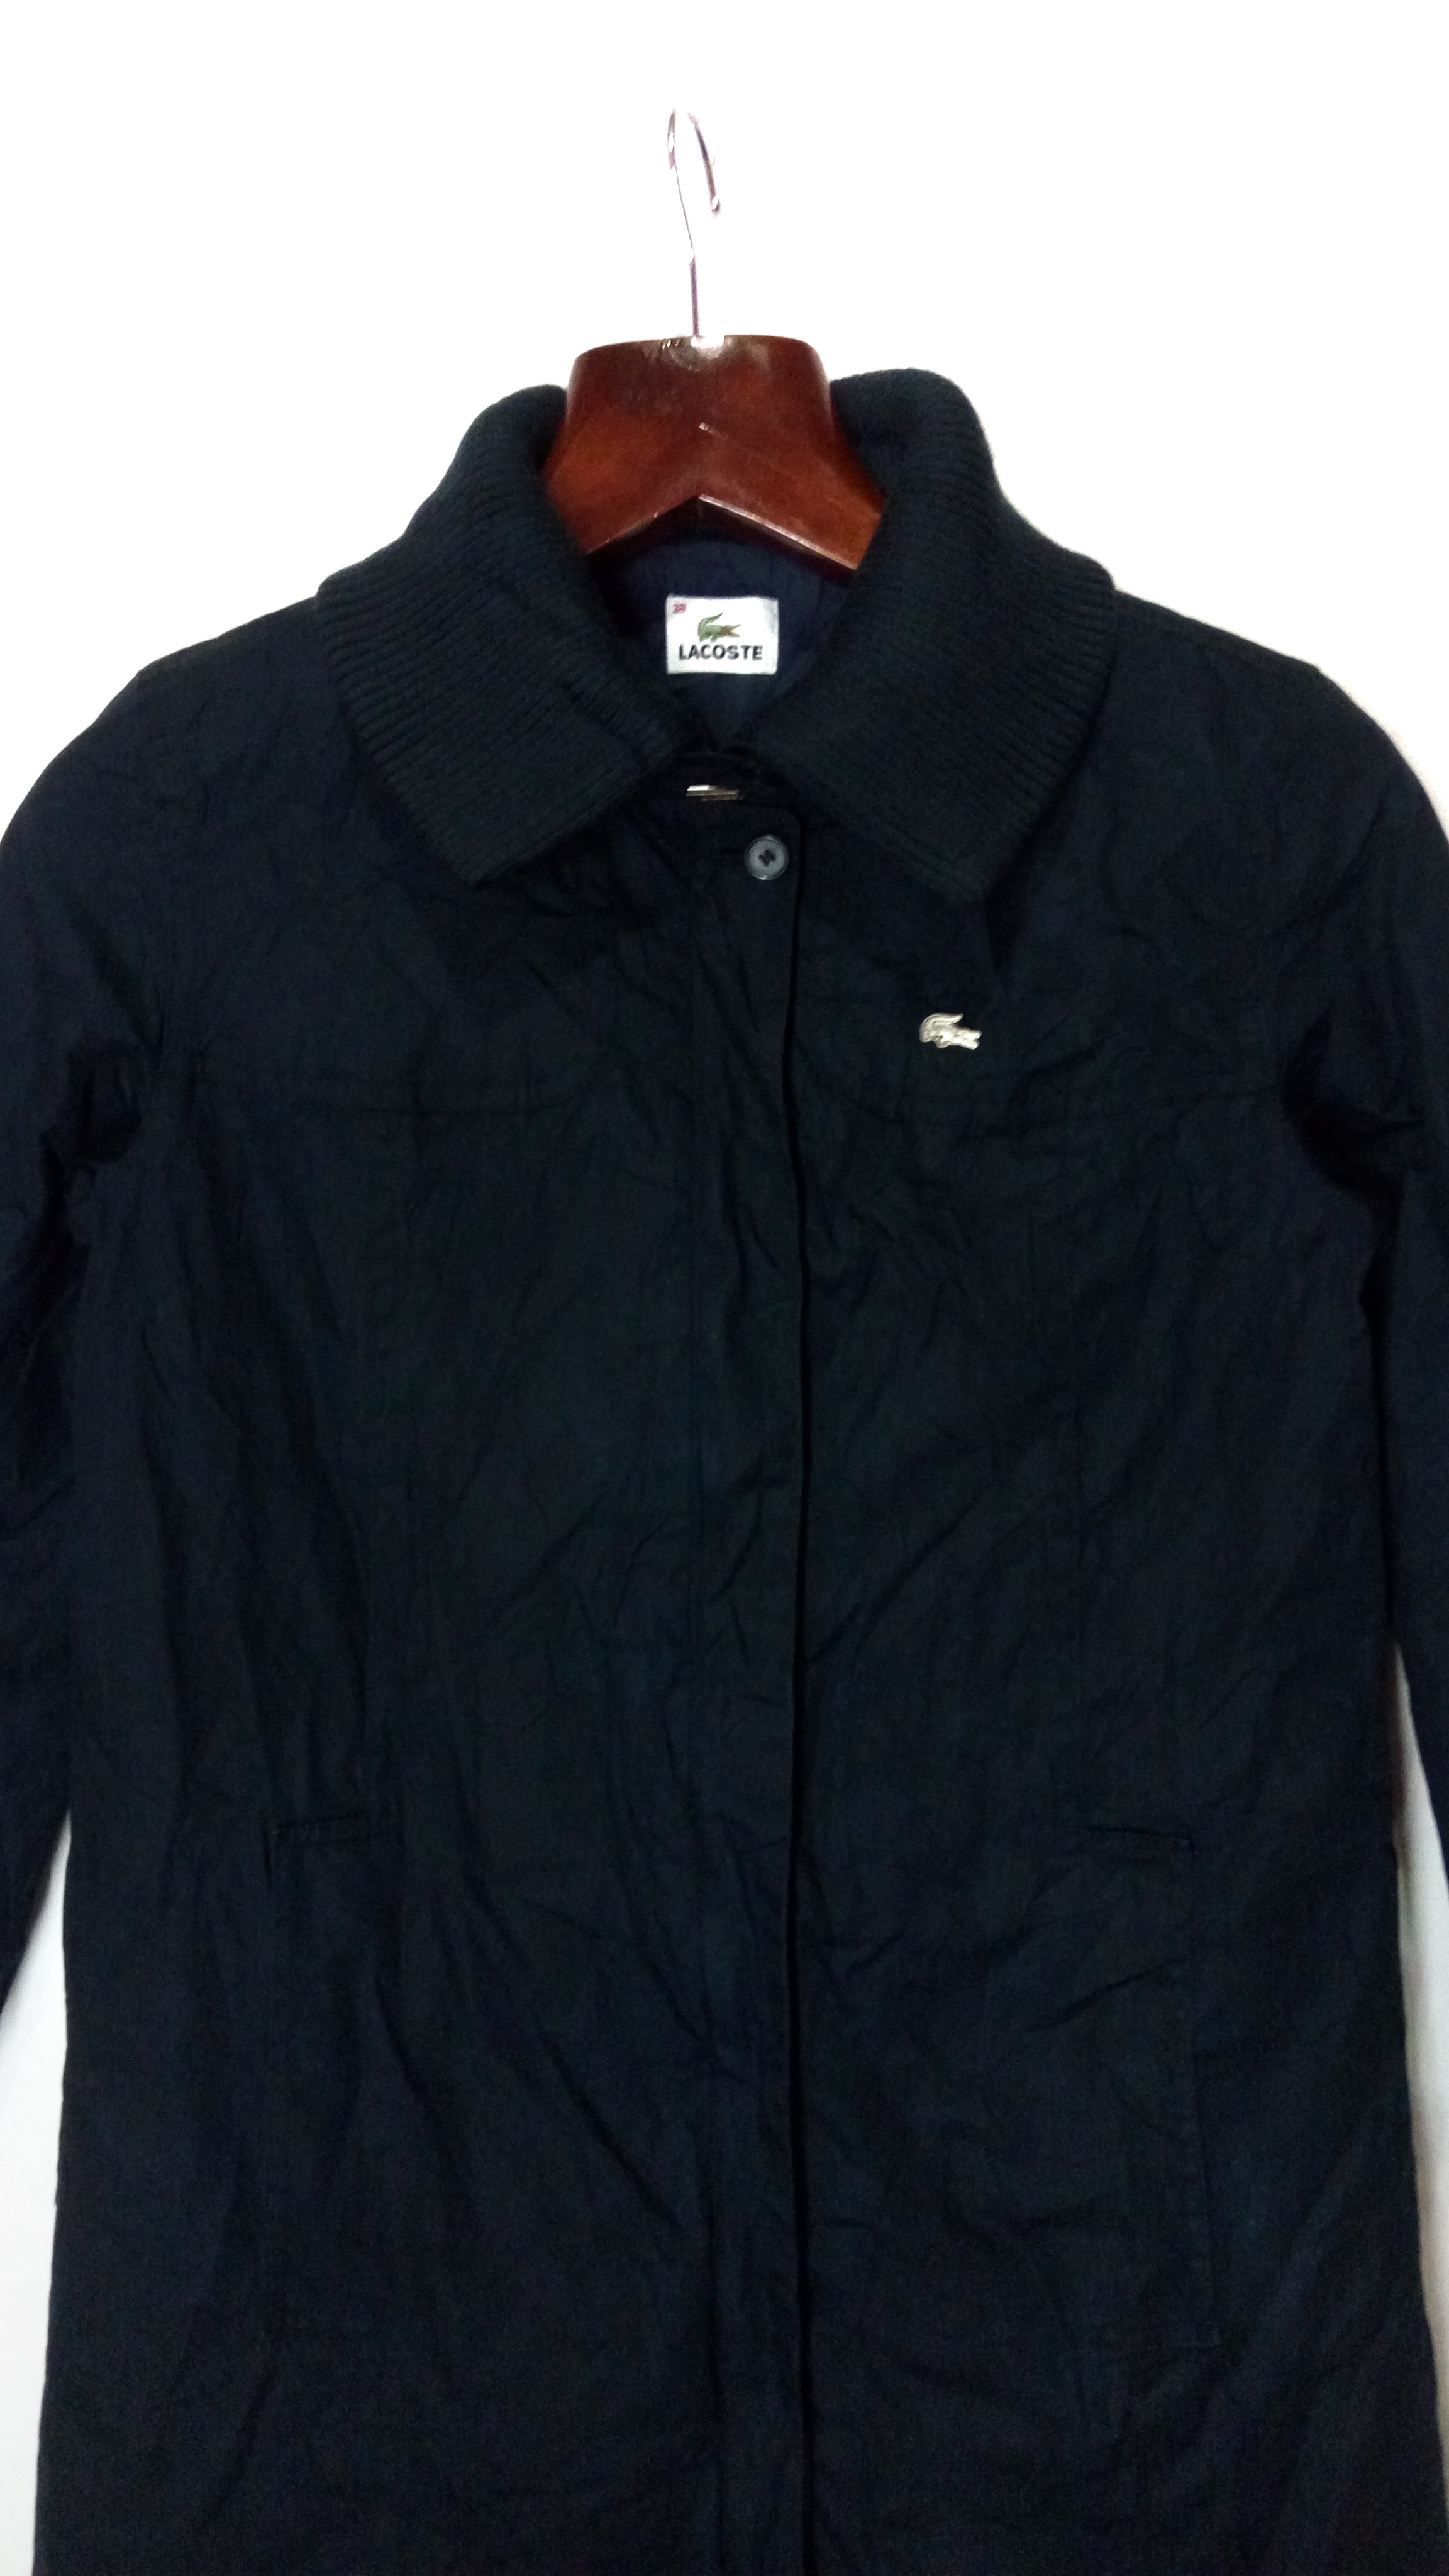 Lacoste parka long jacket dark blue color - 3